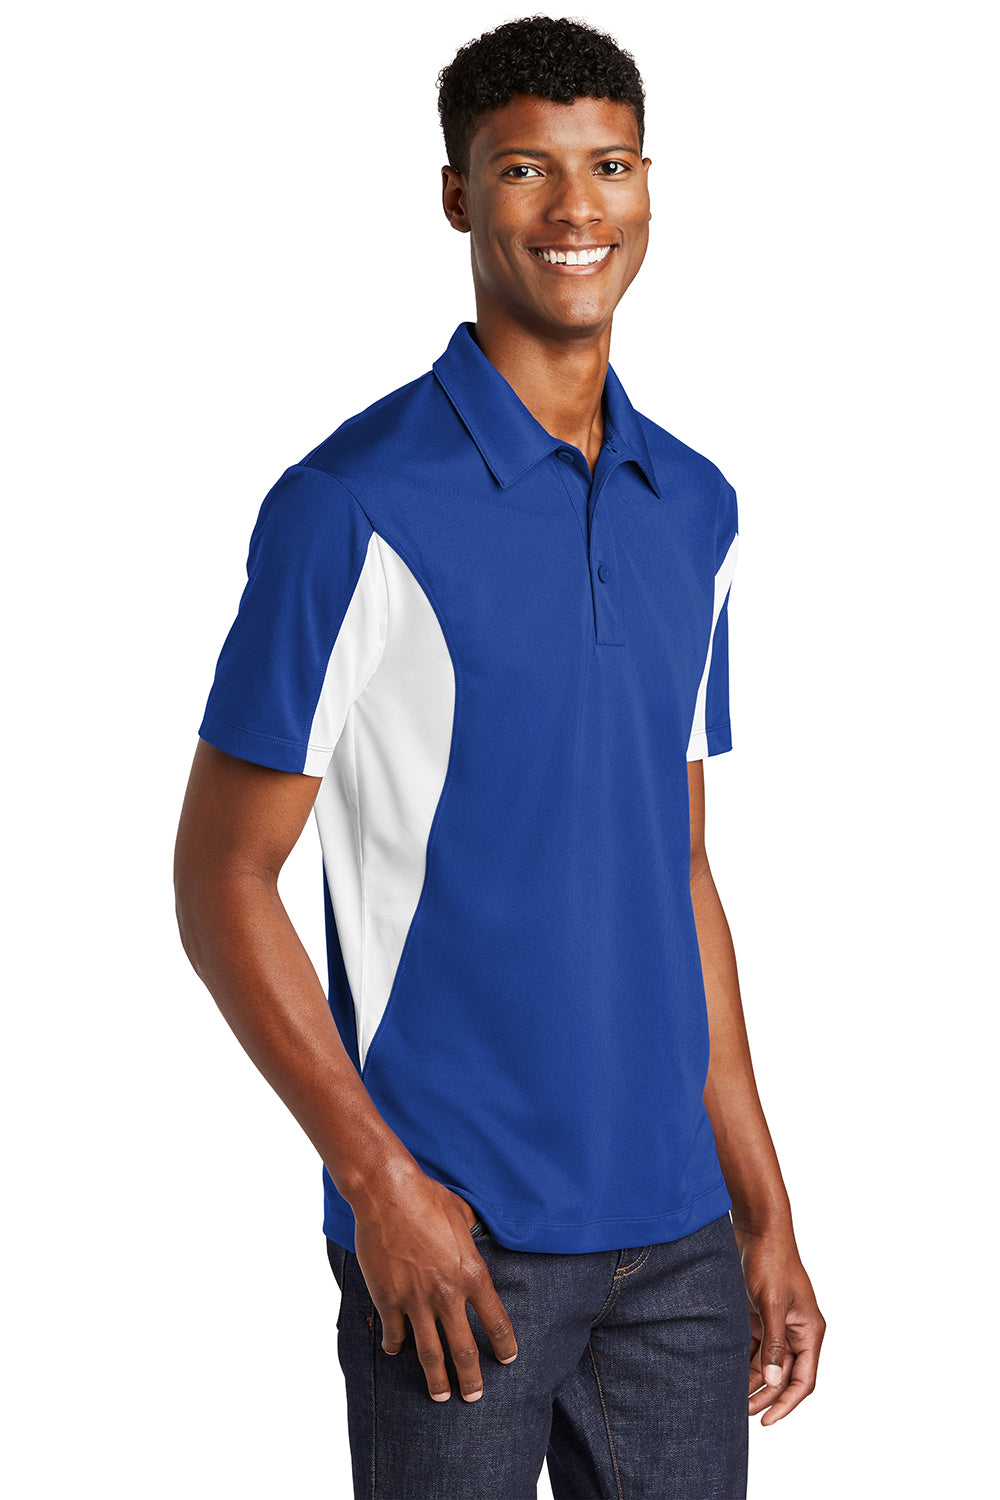 Sport-Tek Mens Sport-Wick Moisture Wicking Short Sleeve Polo Shirt True Royal Blue/White 3Q